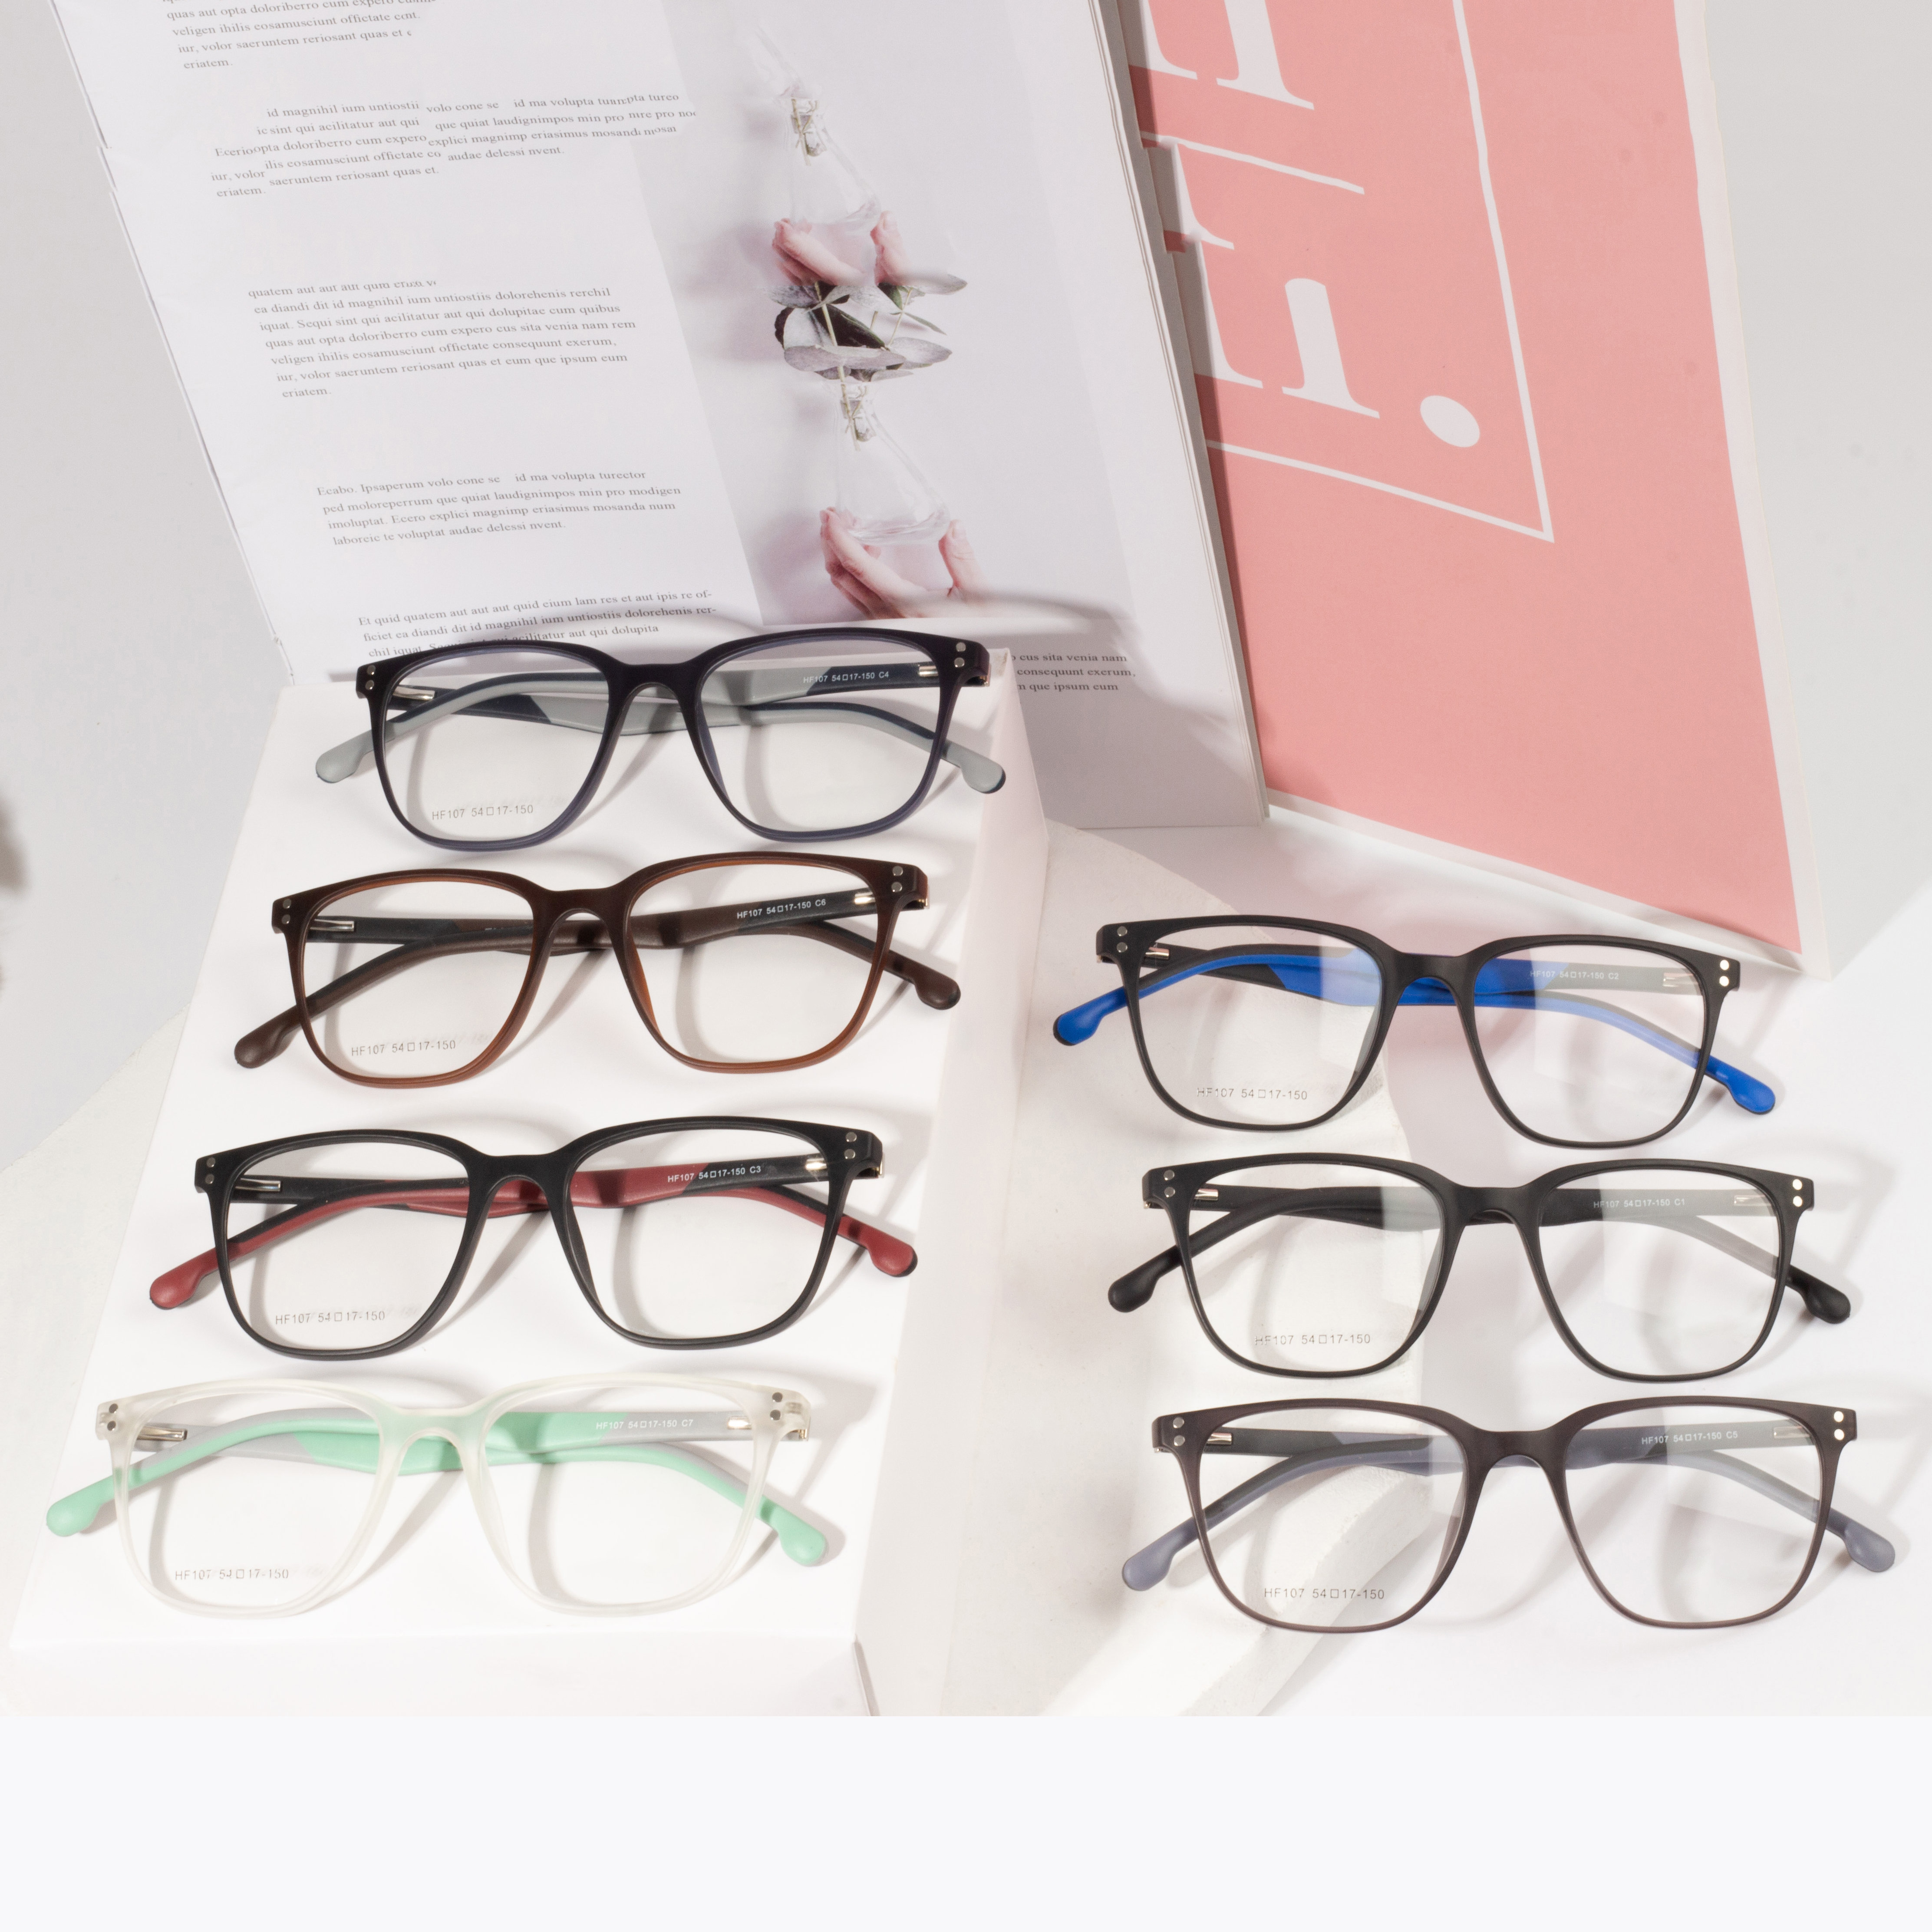 Reasonable price Eyeglass Frames Online - Wholesale New BrandTr90 Eyeglass Frames Fashion – HJ EYEWEAR